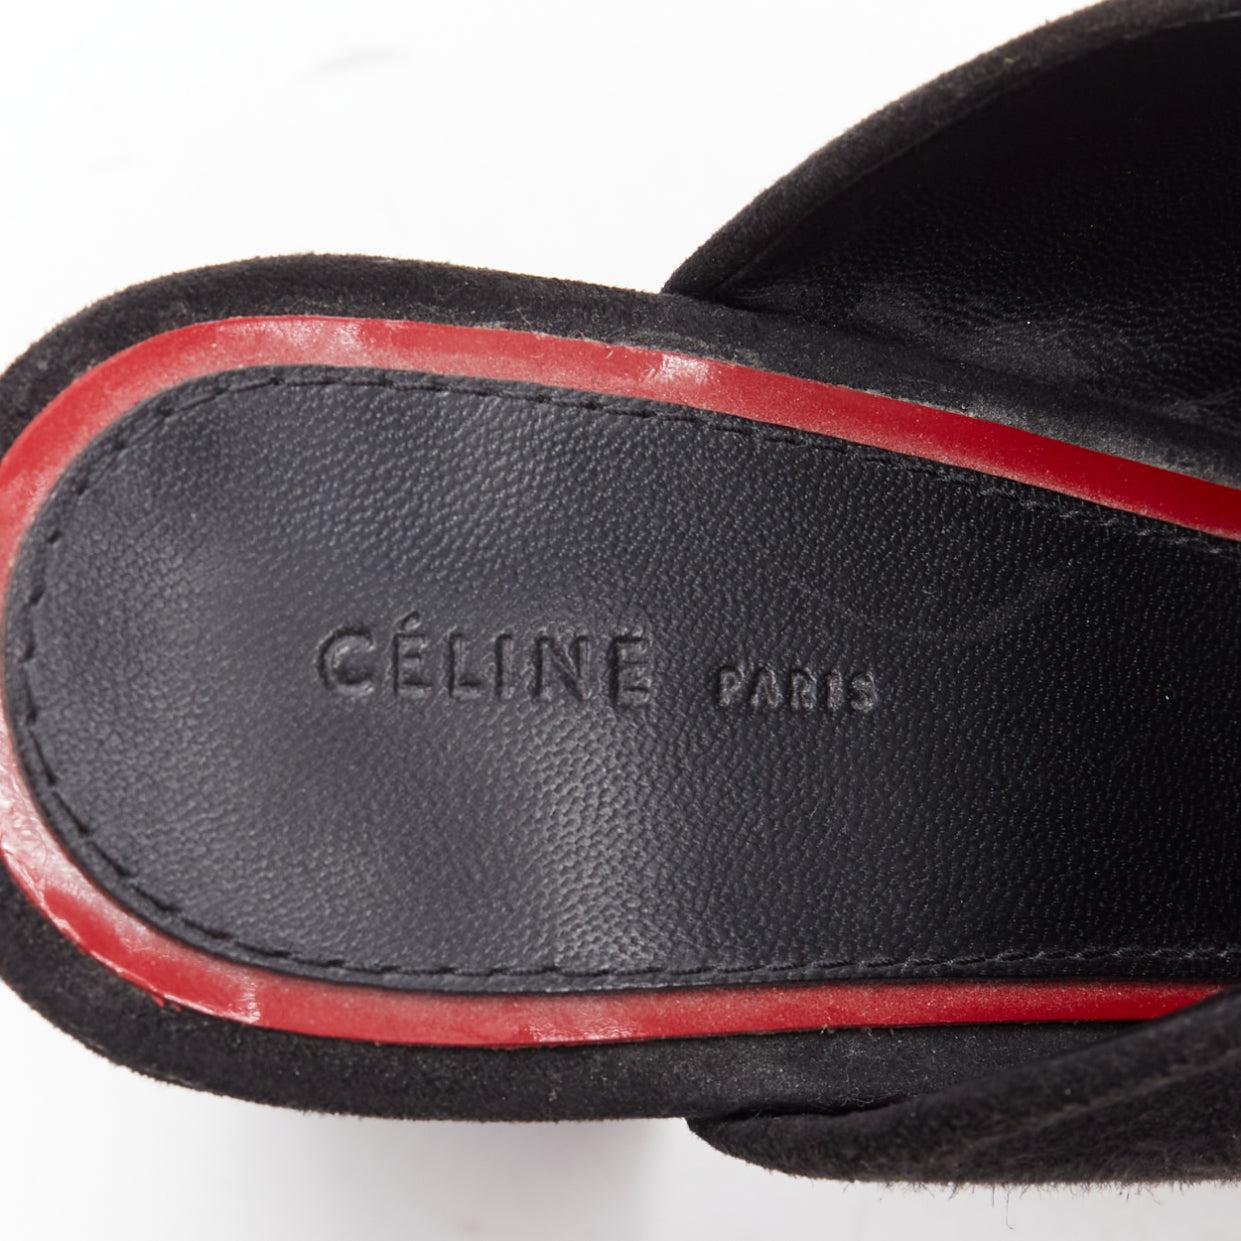 OLD CELINE Phoebe Philo black suede bow high heel mules EU36.5 For Sale 4